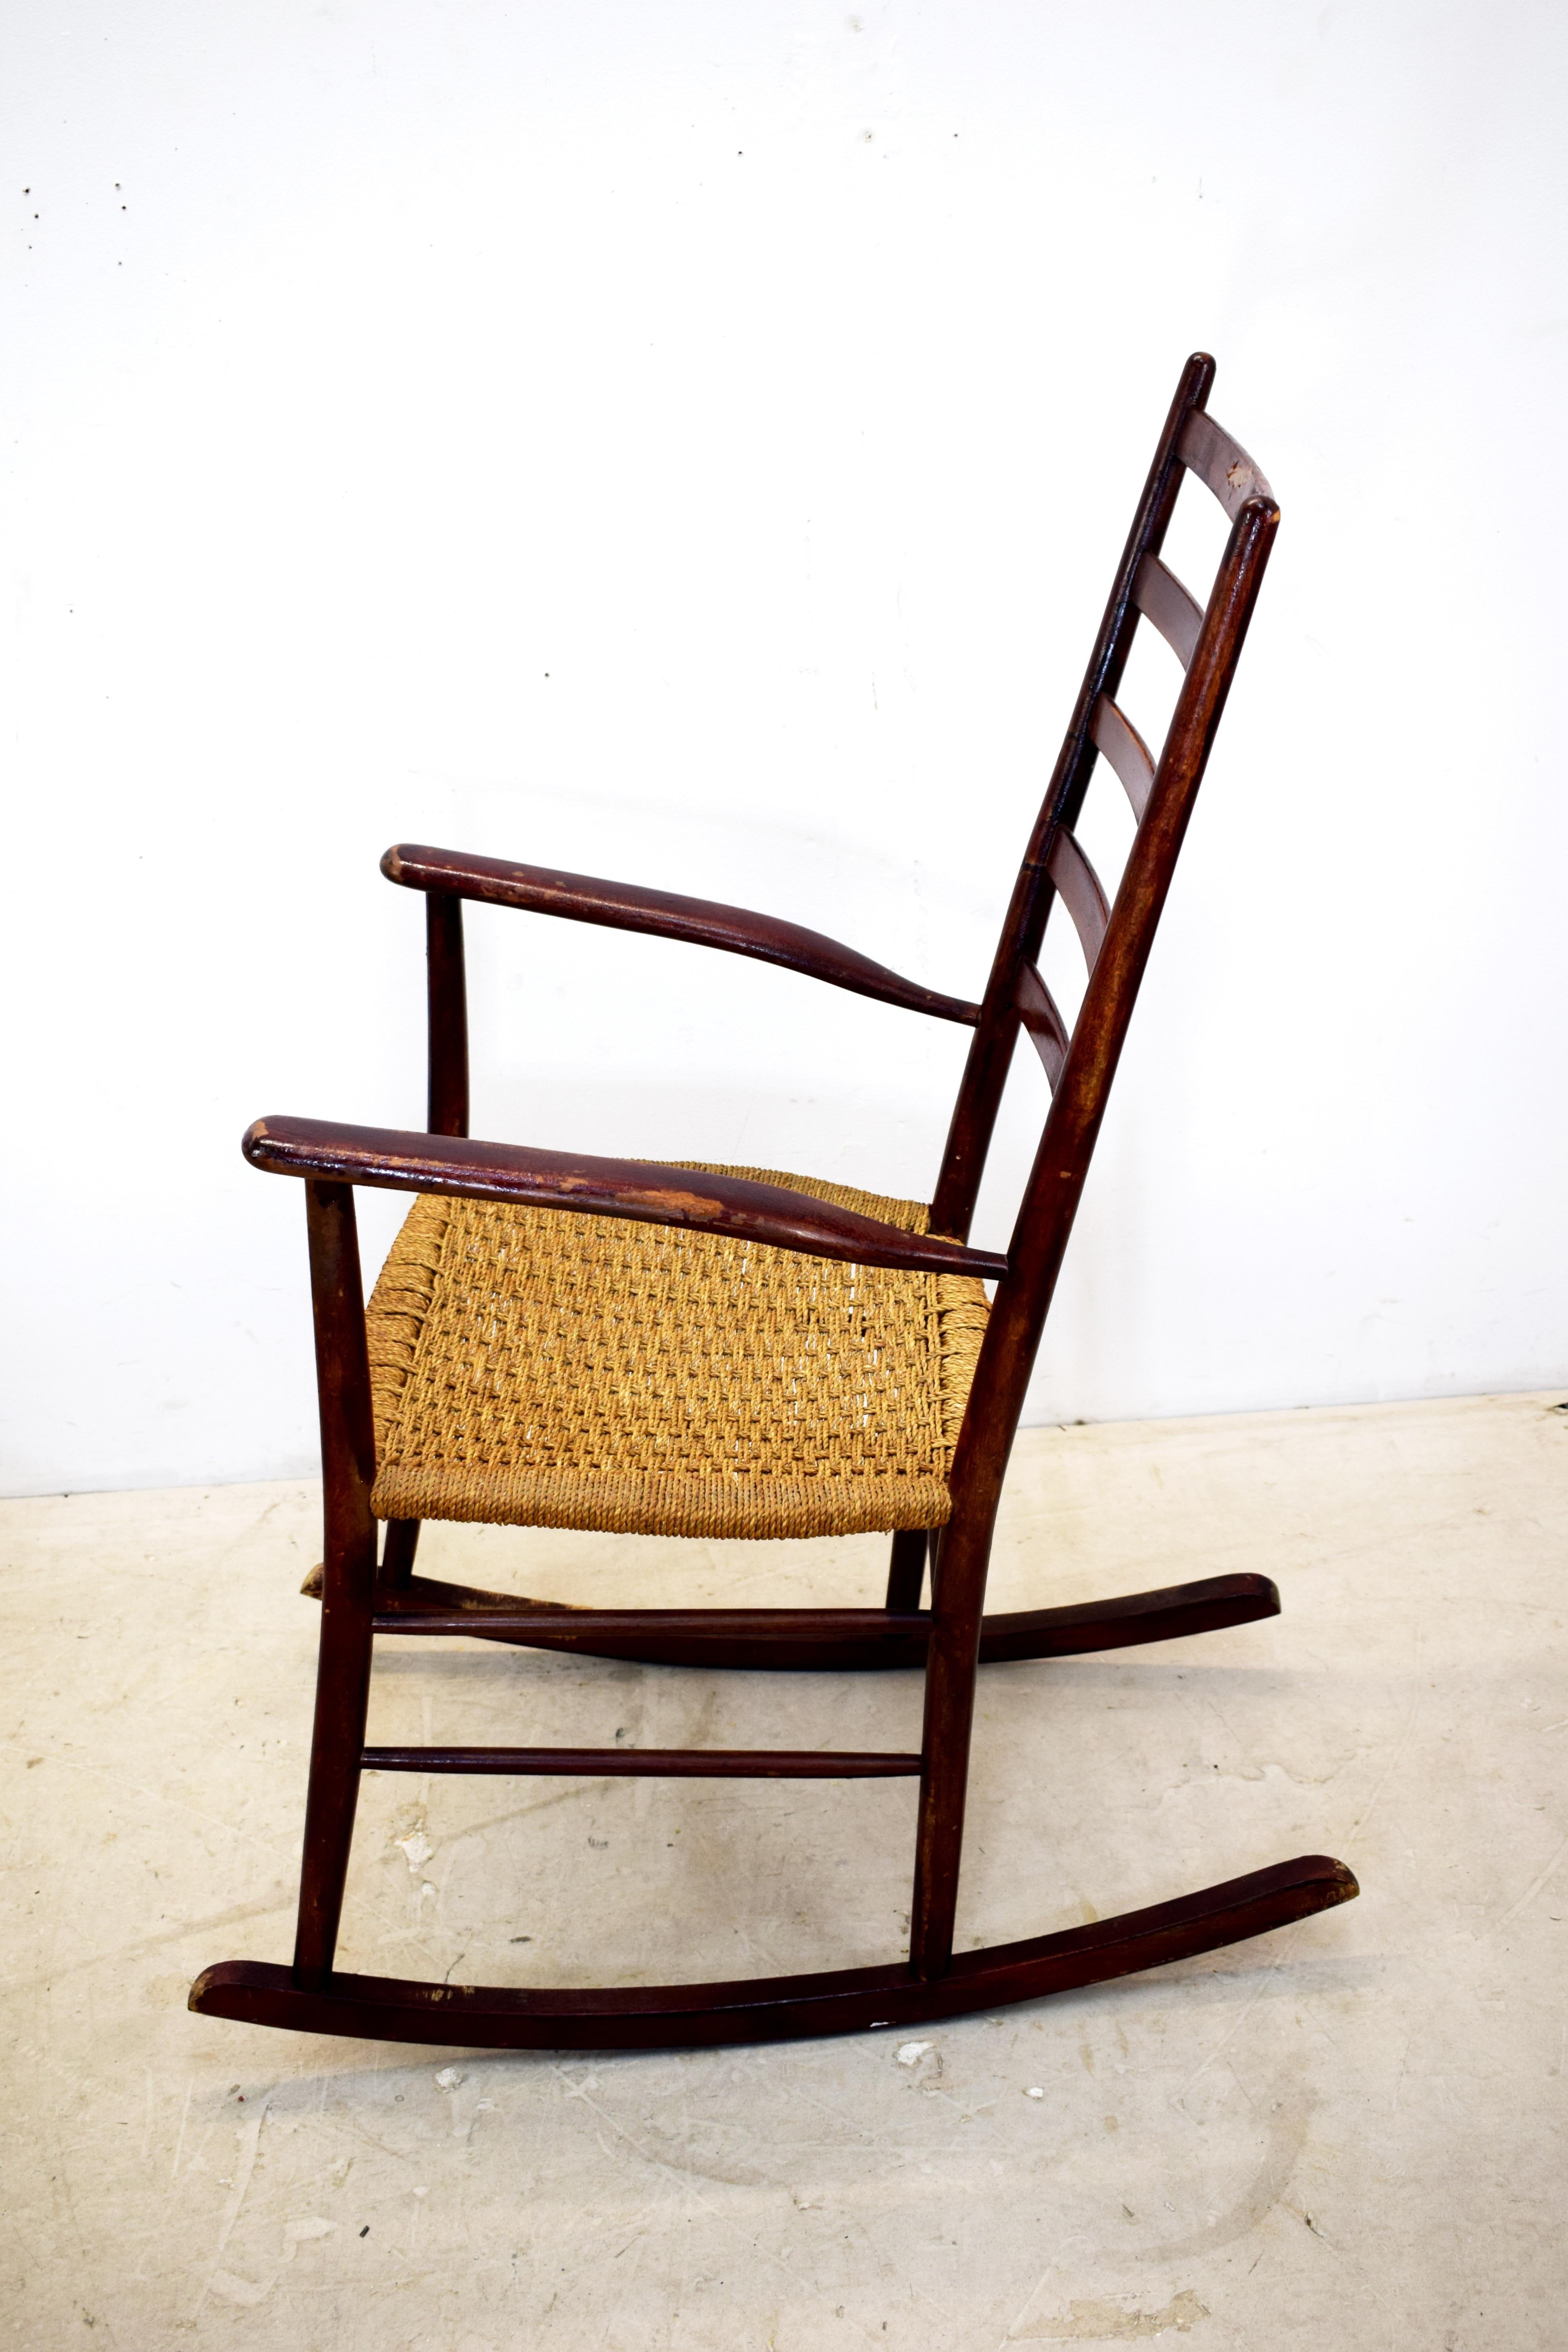 Italian rocking chair, Paolo Buffa style, 1940s.
Dimensions: H=106 cm; W= 80 cm; D= 46 cm.